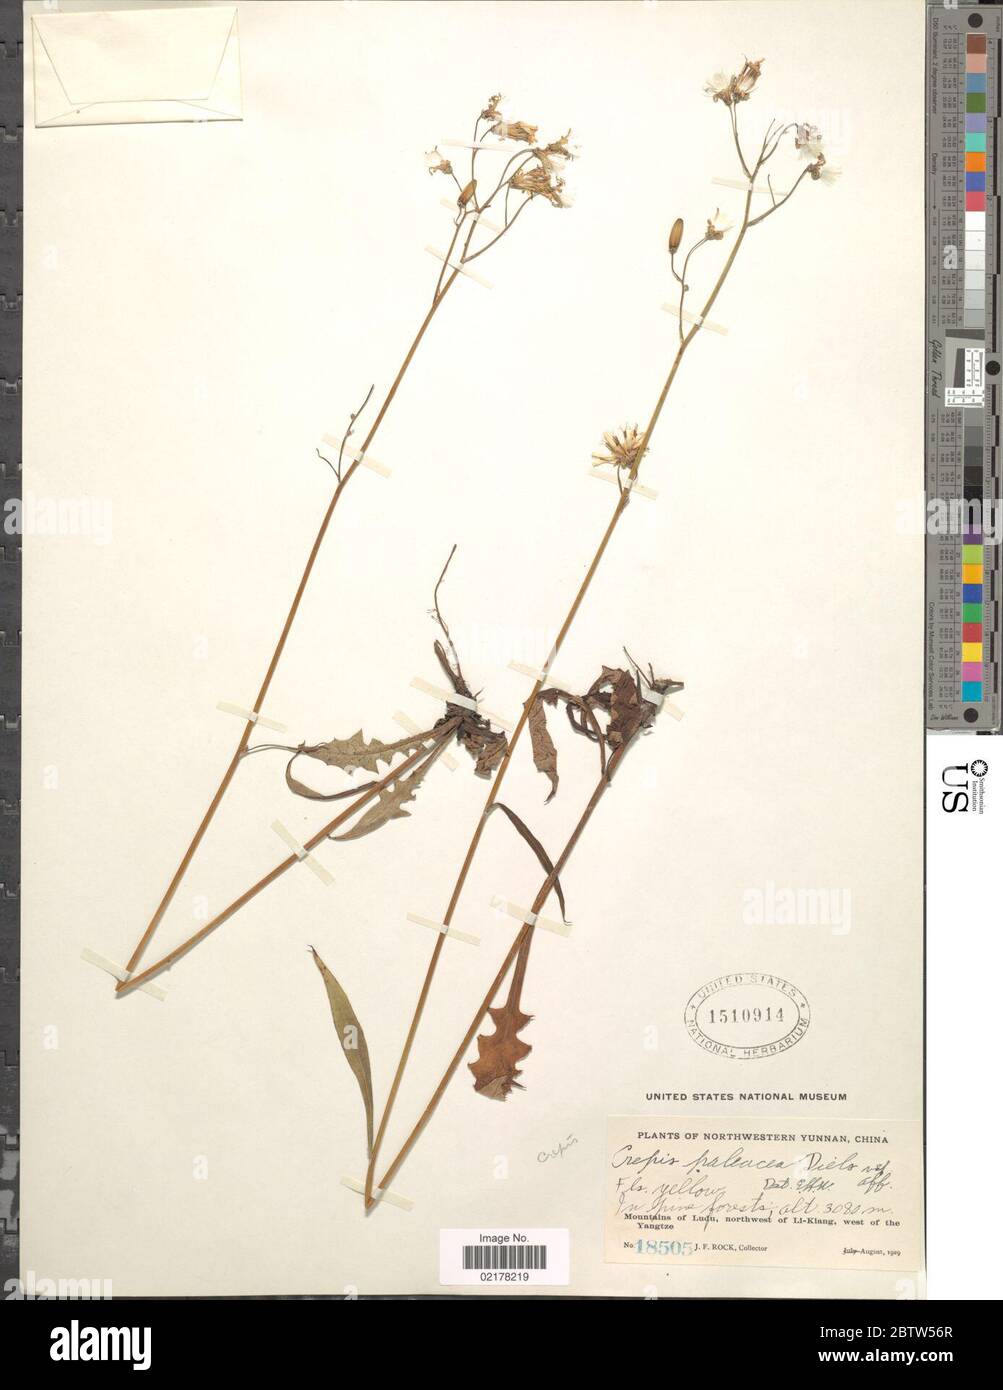 Crepis paleacea Diels. Stock Photo